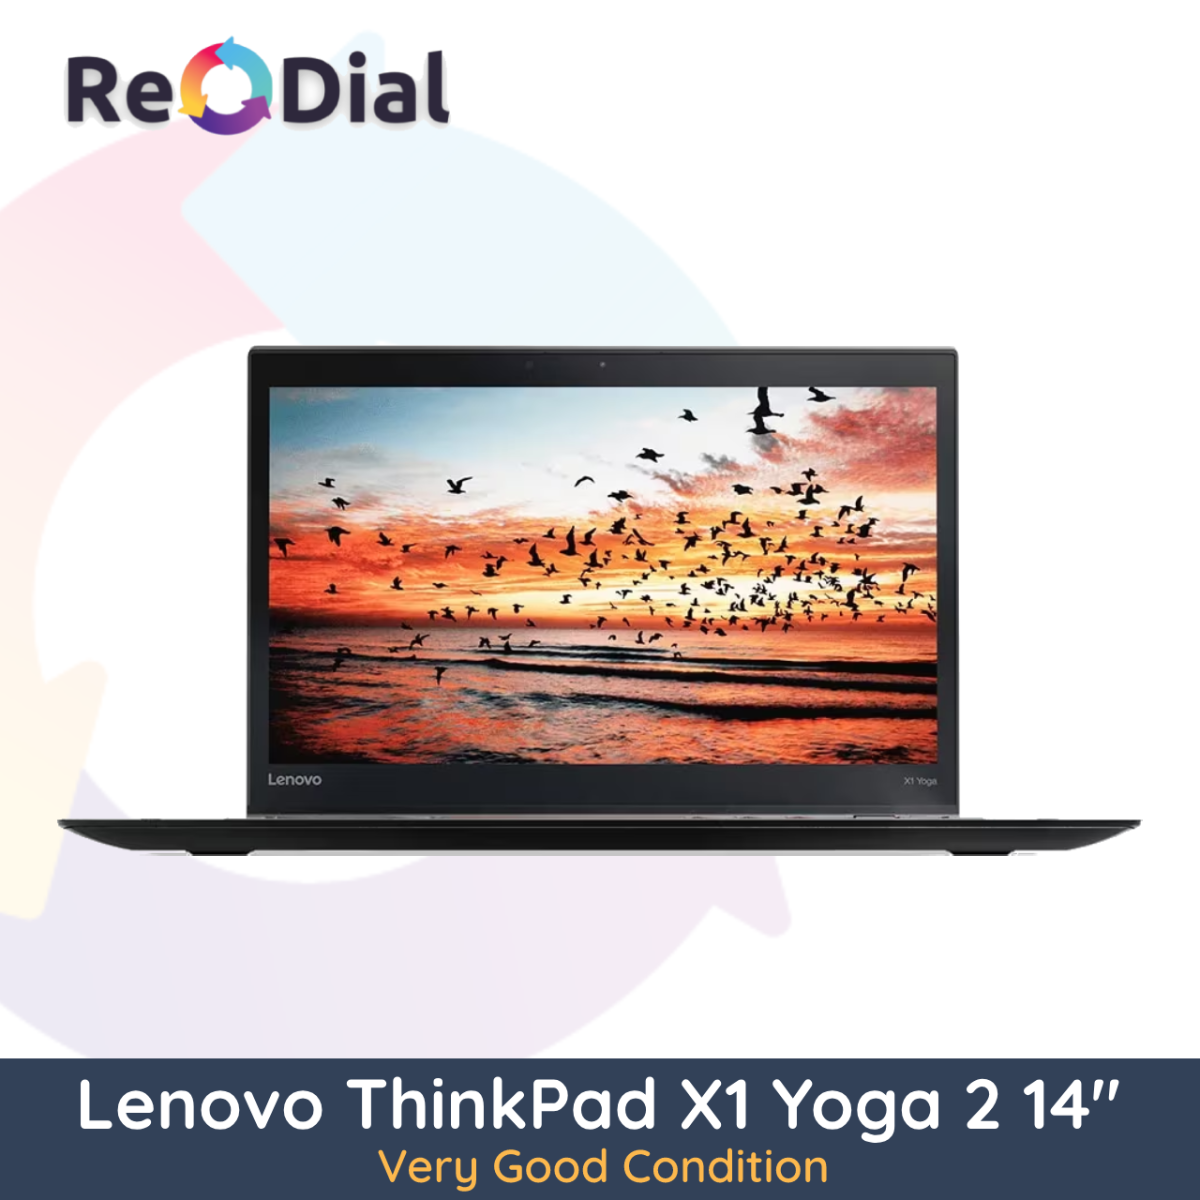 Lenovo ThinkPad X1 Yoga (2nd Gen) 14" i7-7600U 256GB 16GB RAM - Very Good Condition